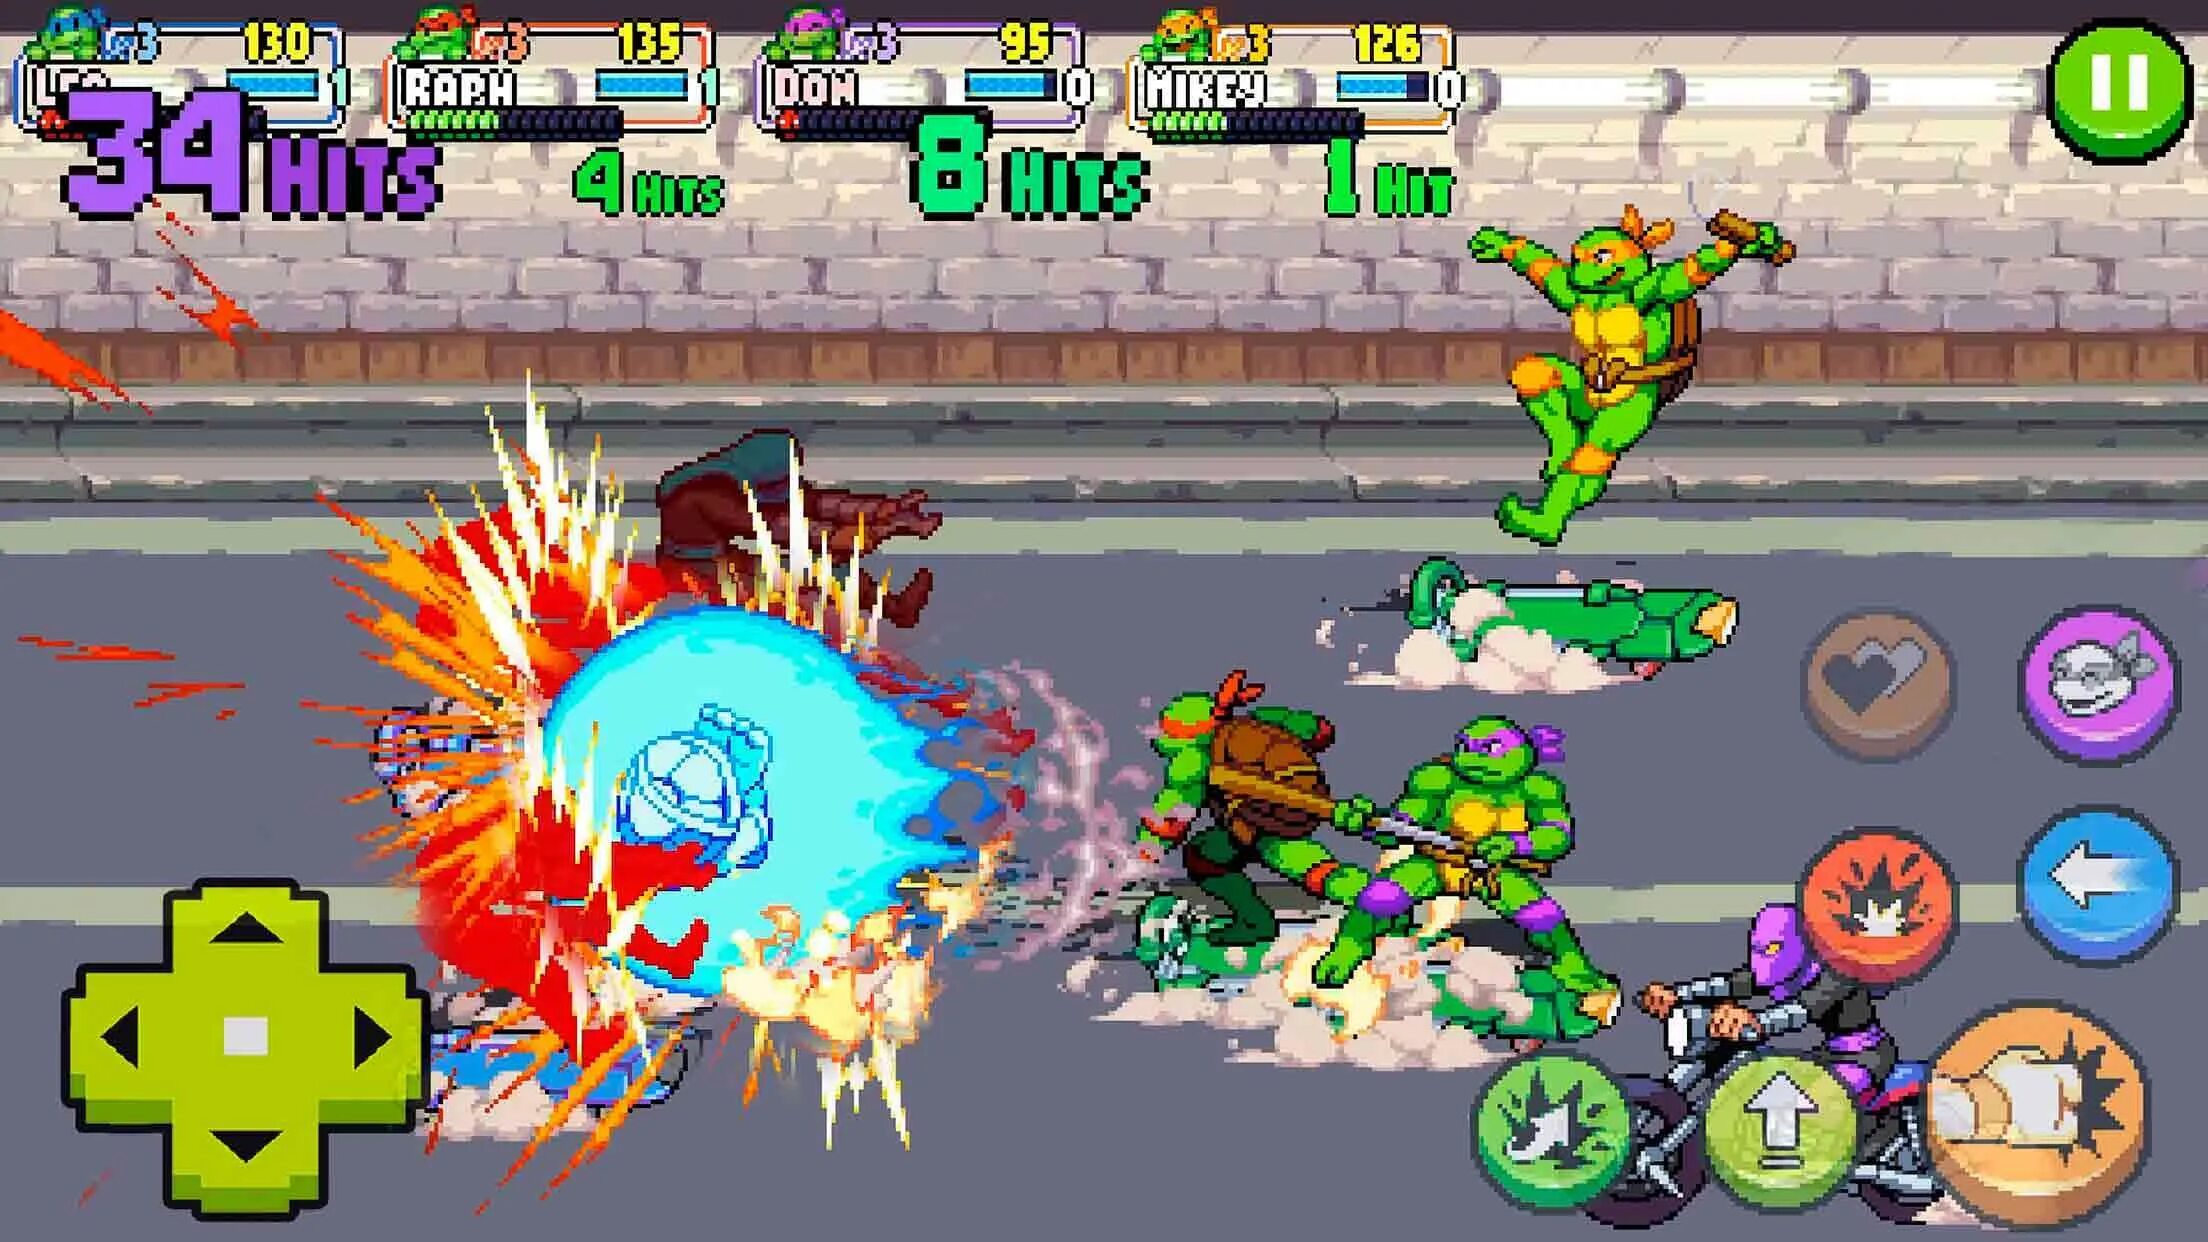 TMNT Shredder Revenge. Teenage Mutant Ninja Turtles (игра, 2003). TMNT Mutant Mayhem Shredder. Черепашки ниндзя игра на Икс бокс. Tmnt shredder android